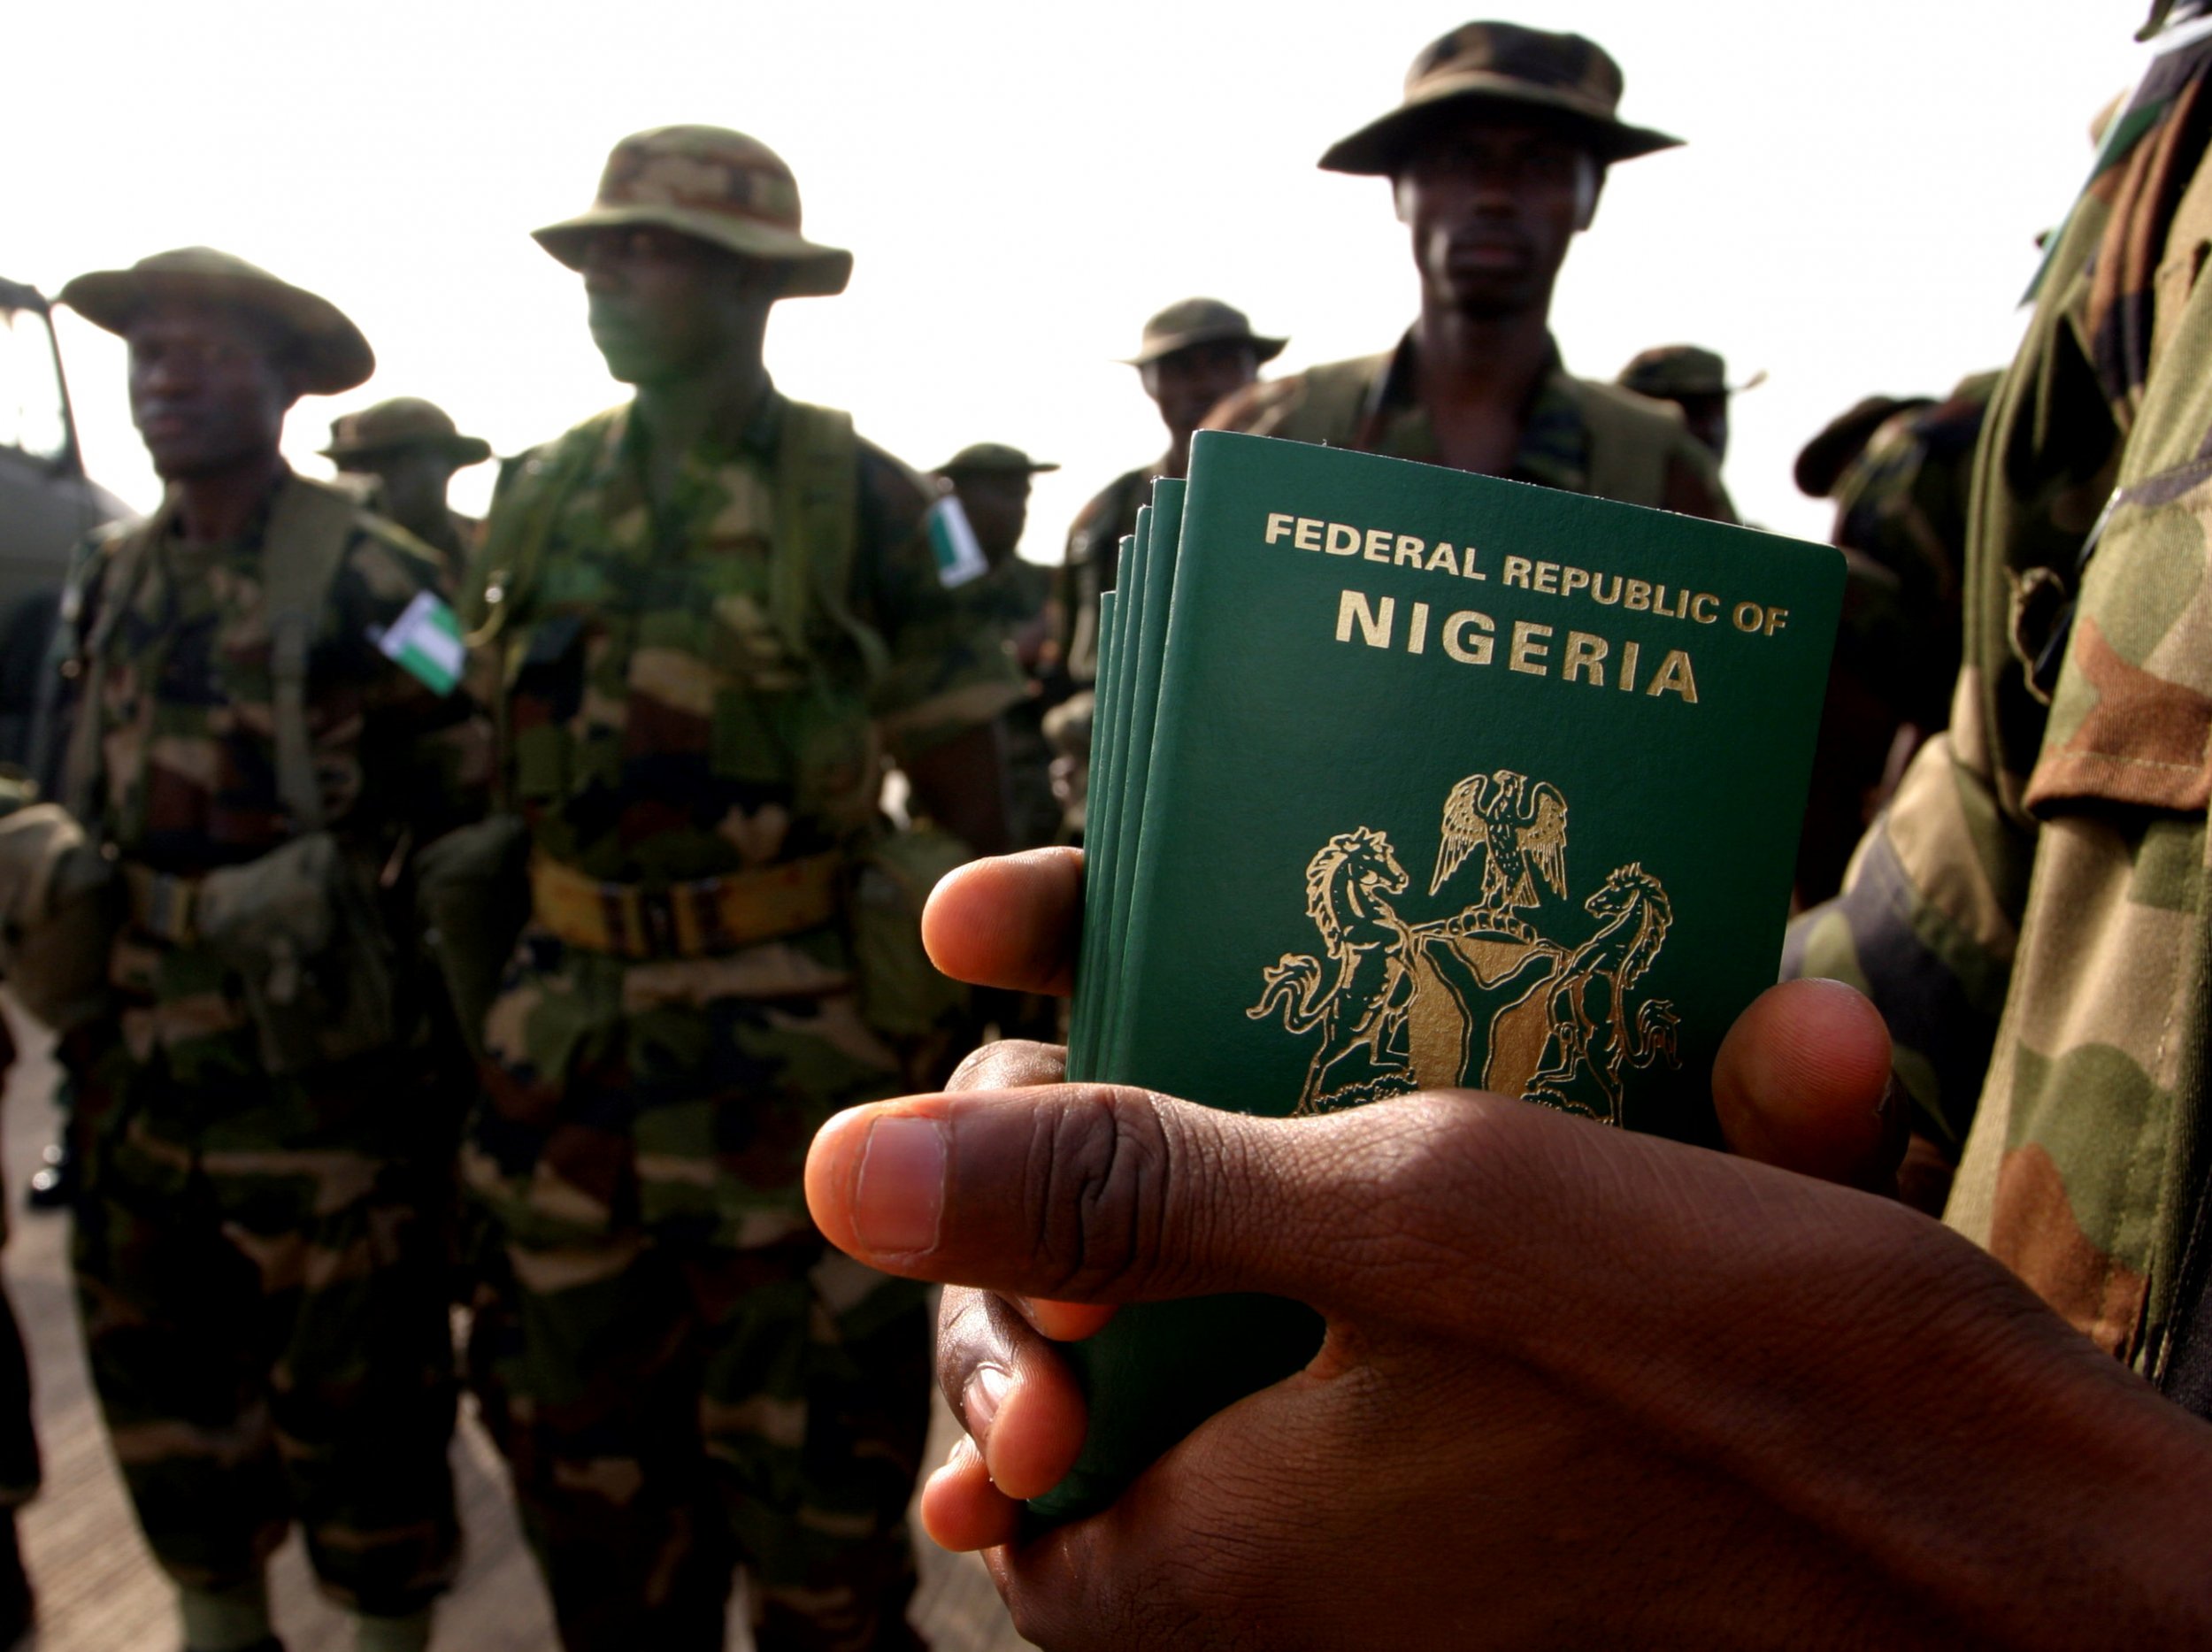 Nigerian passports